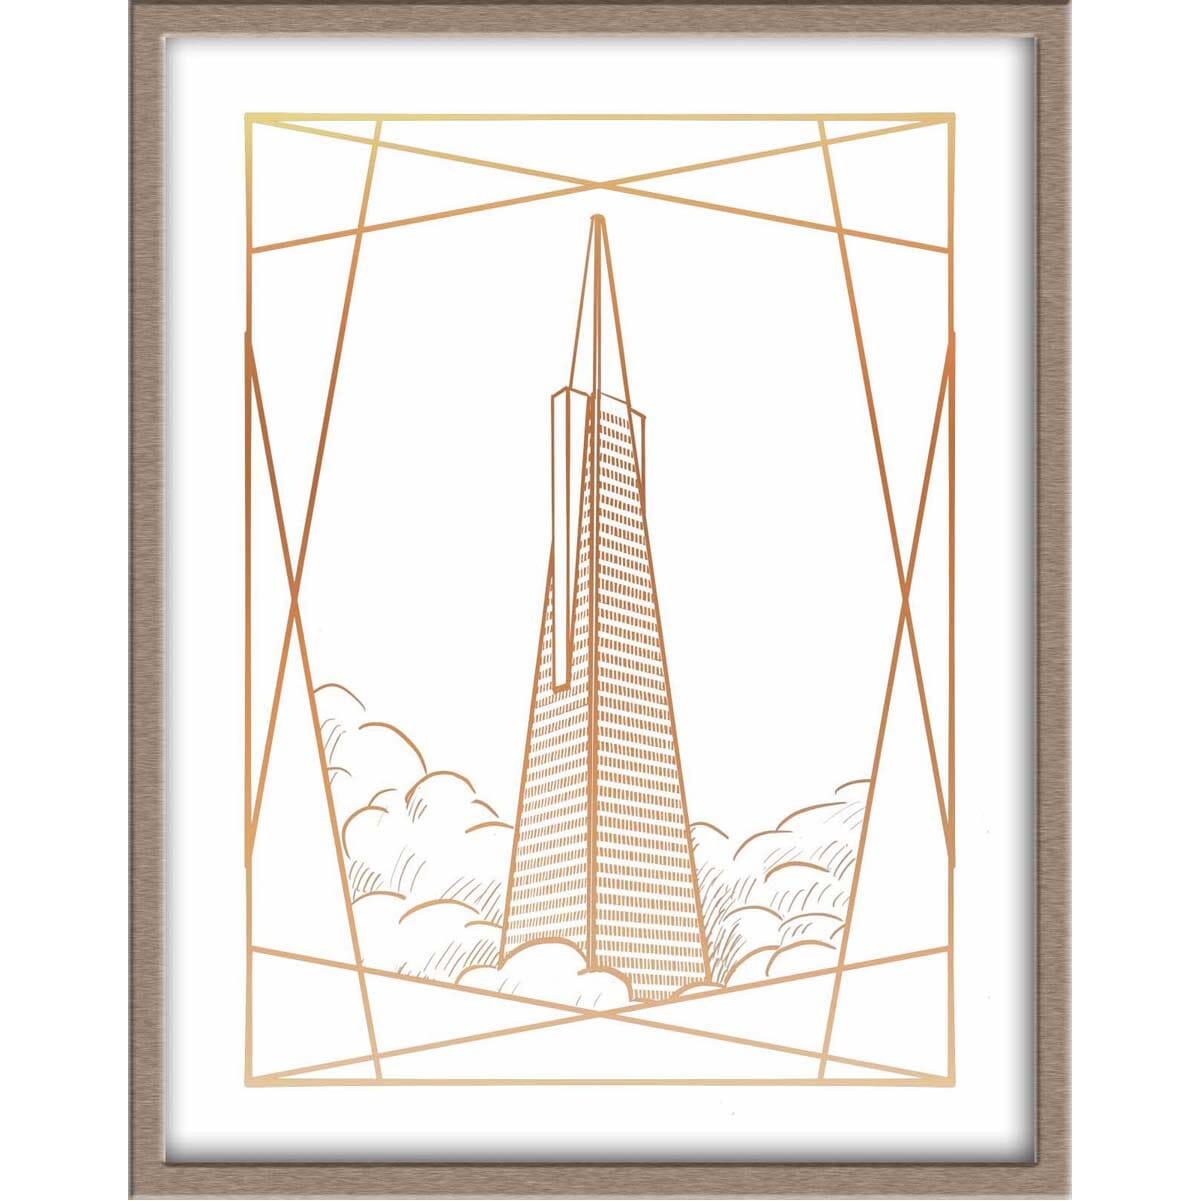 San Francisco's Transamerica Building Landmark Foiled Print Posters, Prints, & Visual Artwork JoyousJoyfulJoyness 